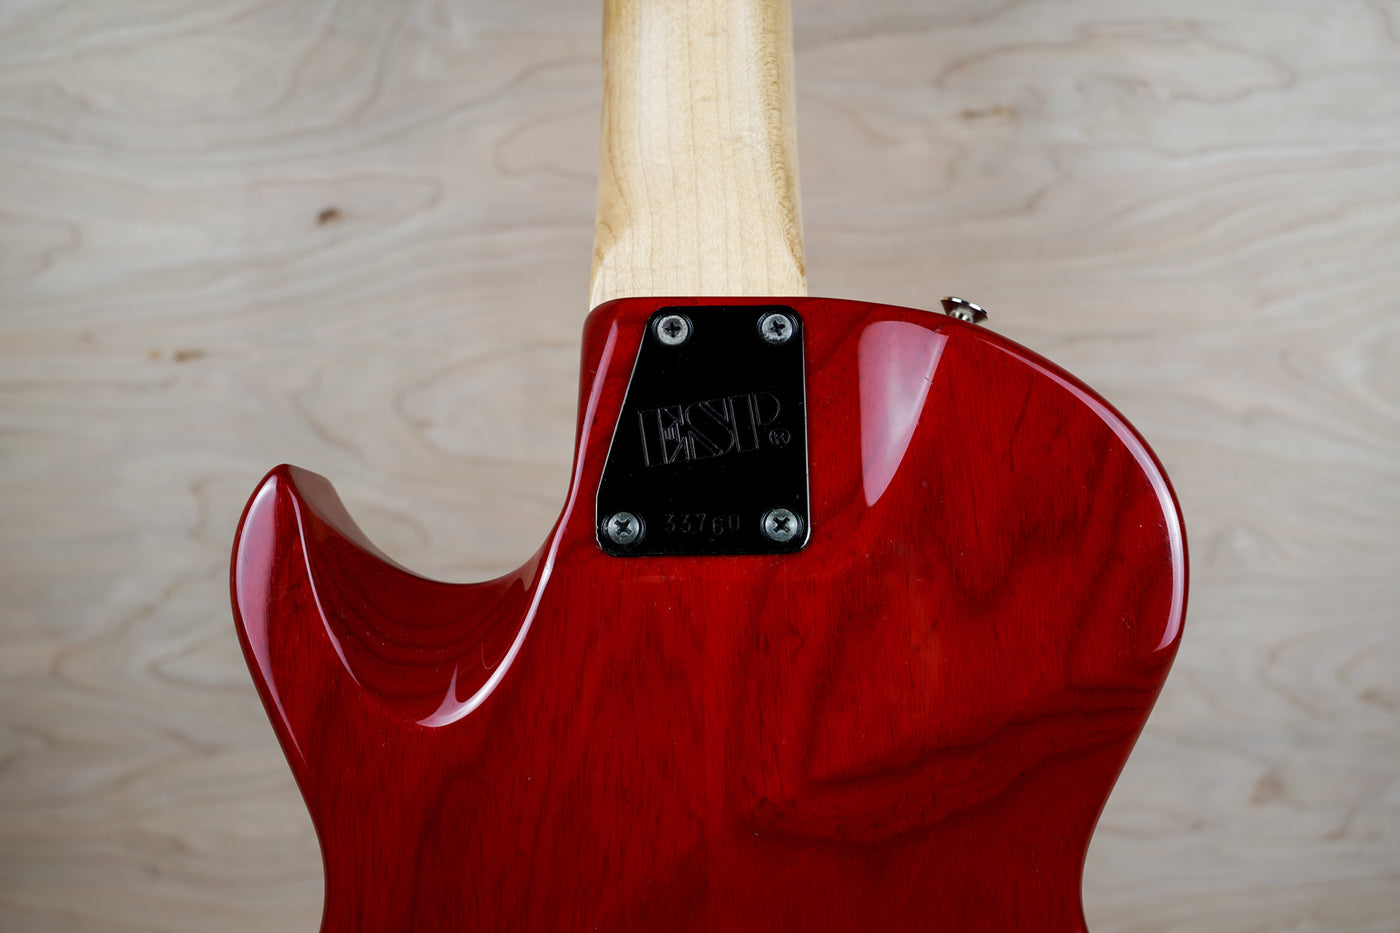 ESP Custom Order S-E925 Single Cut Bass 1998 See-Thru Red Made in Japan MIJ w/ Bag